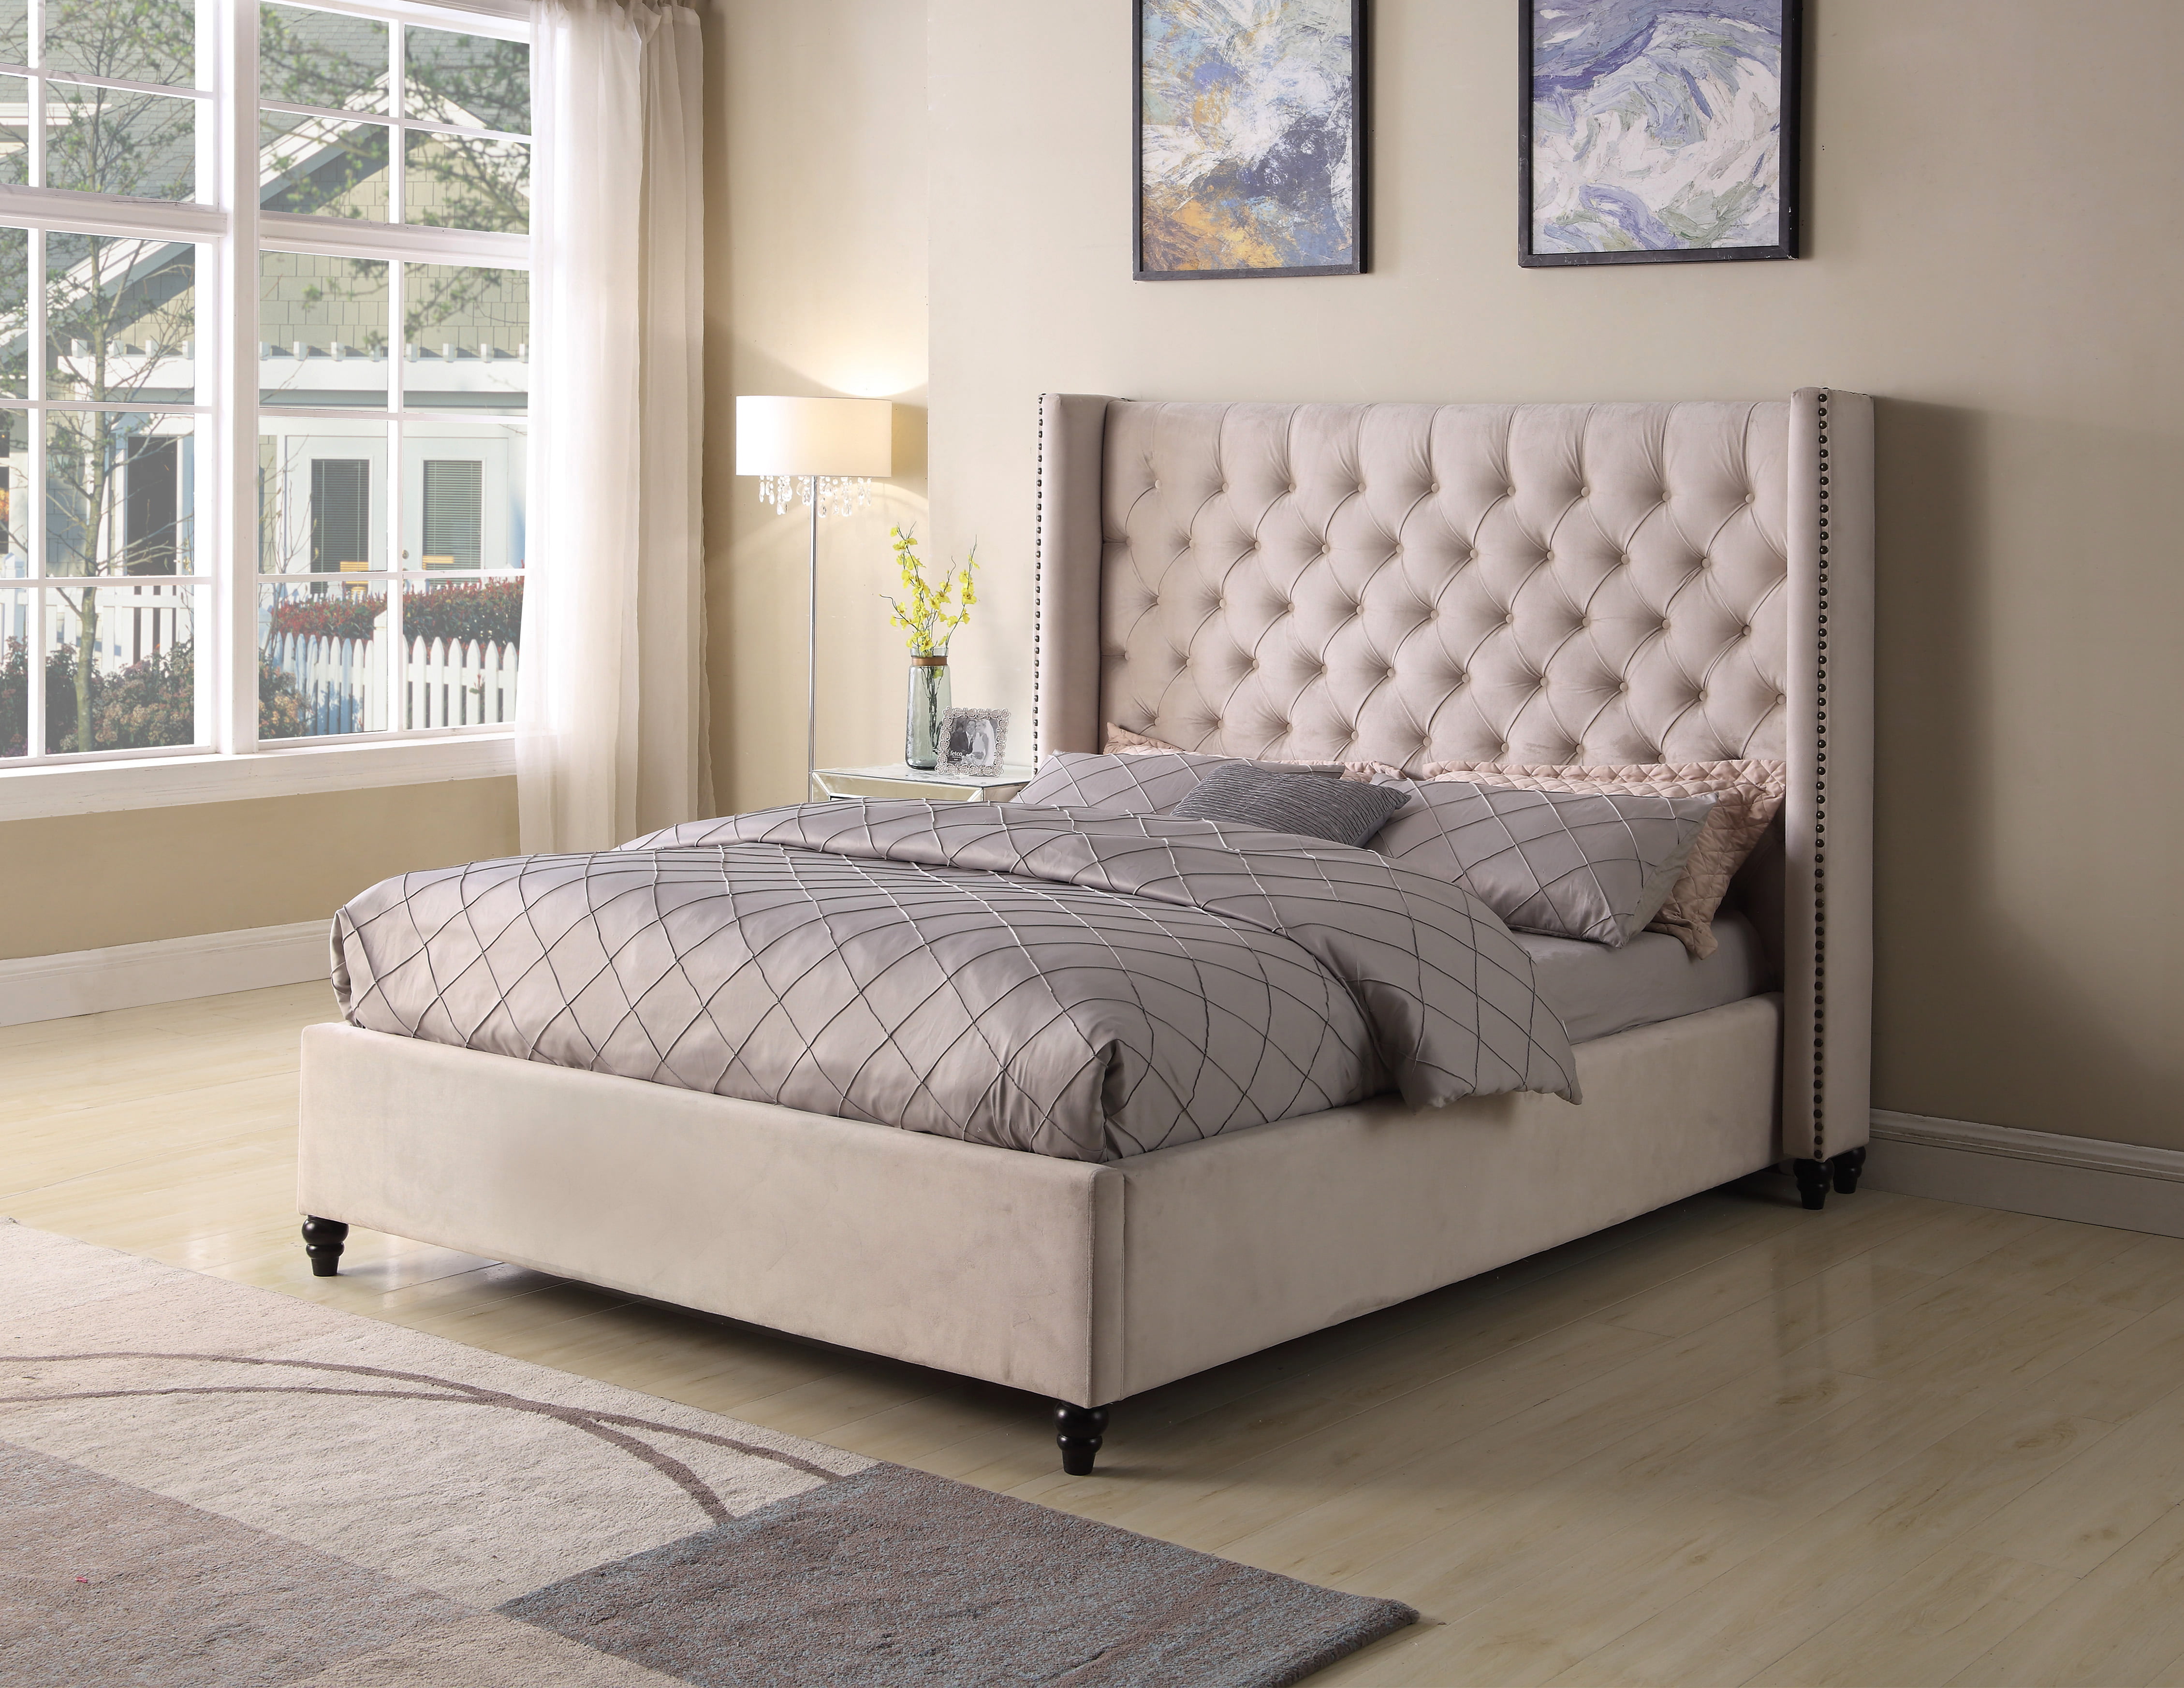 tufted headboard bed bedroom furniture